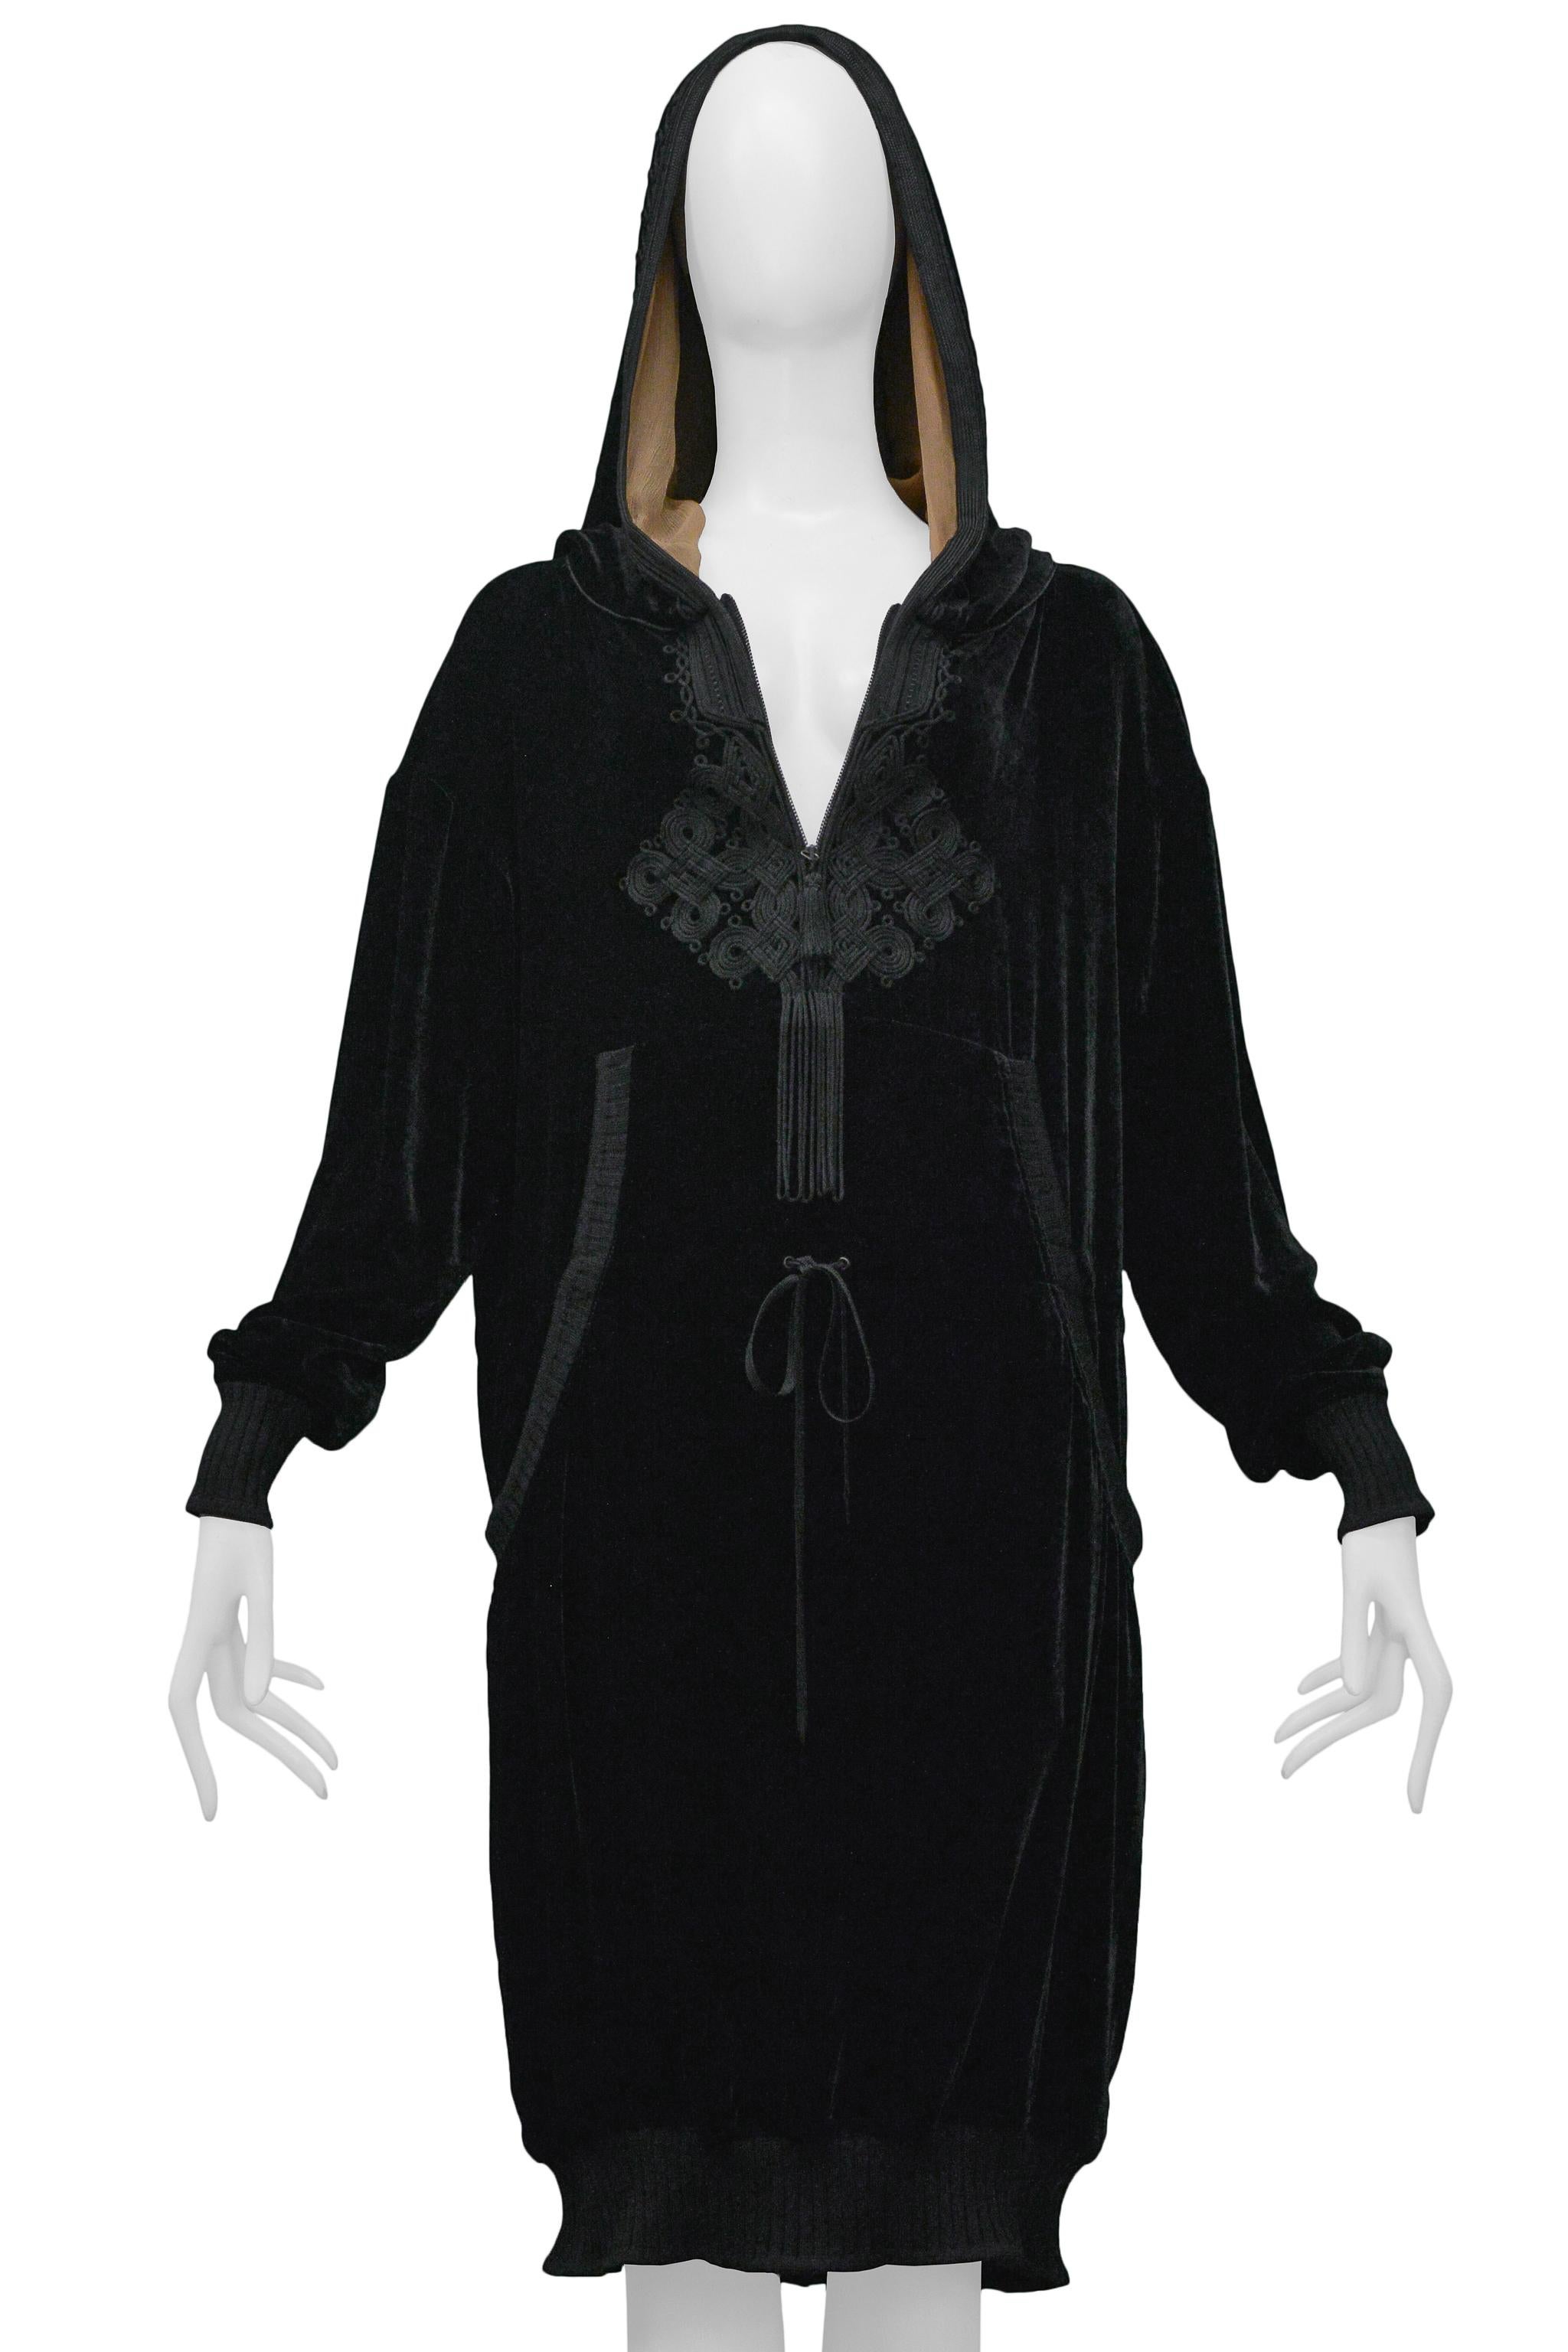 Jean Paul Gaultier Black Velvet Hoodie Tunic Dress 2010 For Sale 1